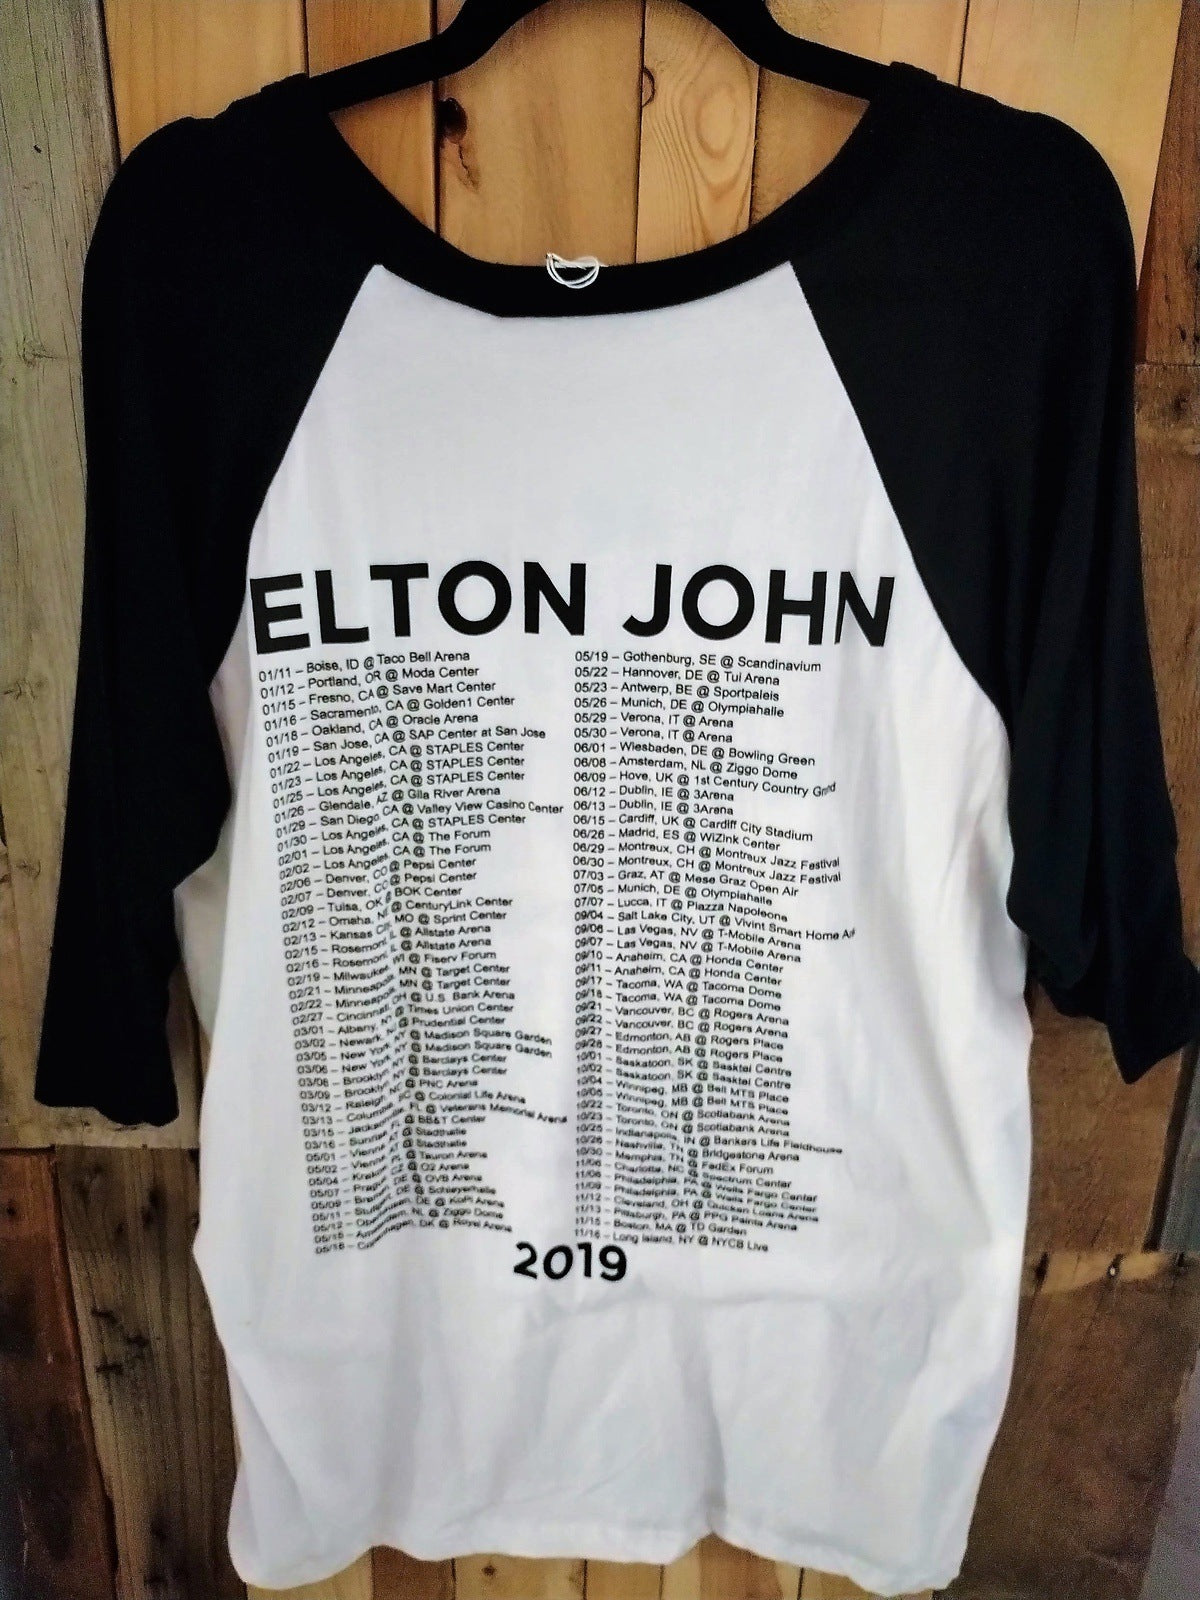 Elton John "Rocket Man" Tour Baseball T Shirt 2019 Size XL